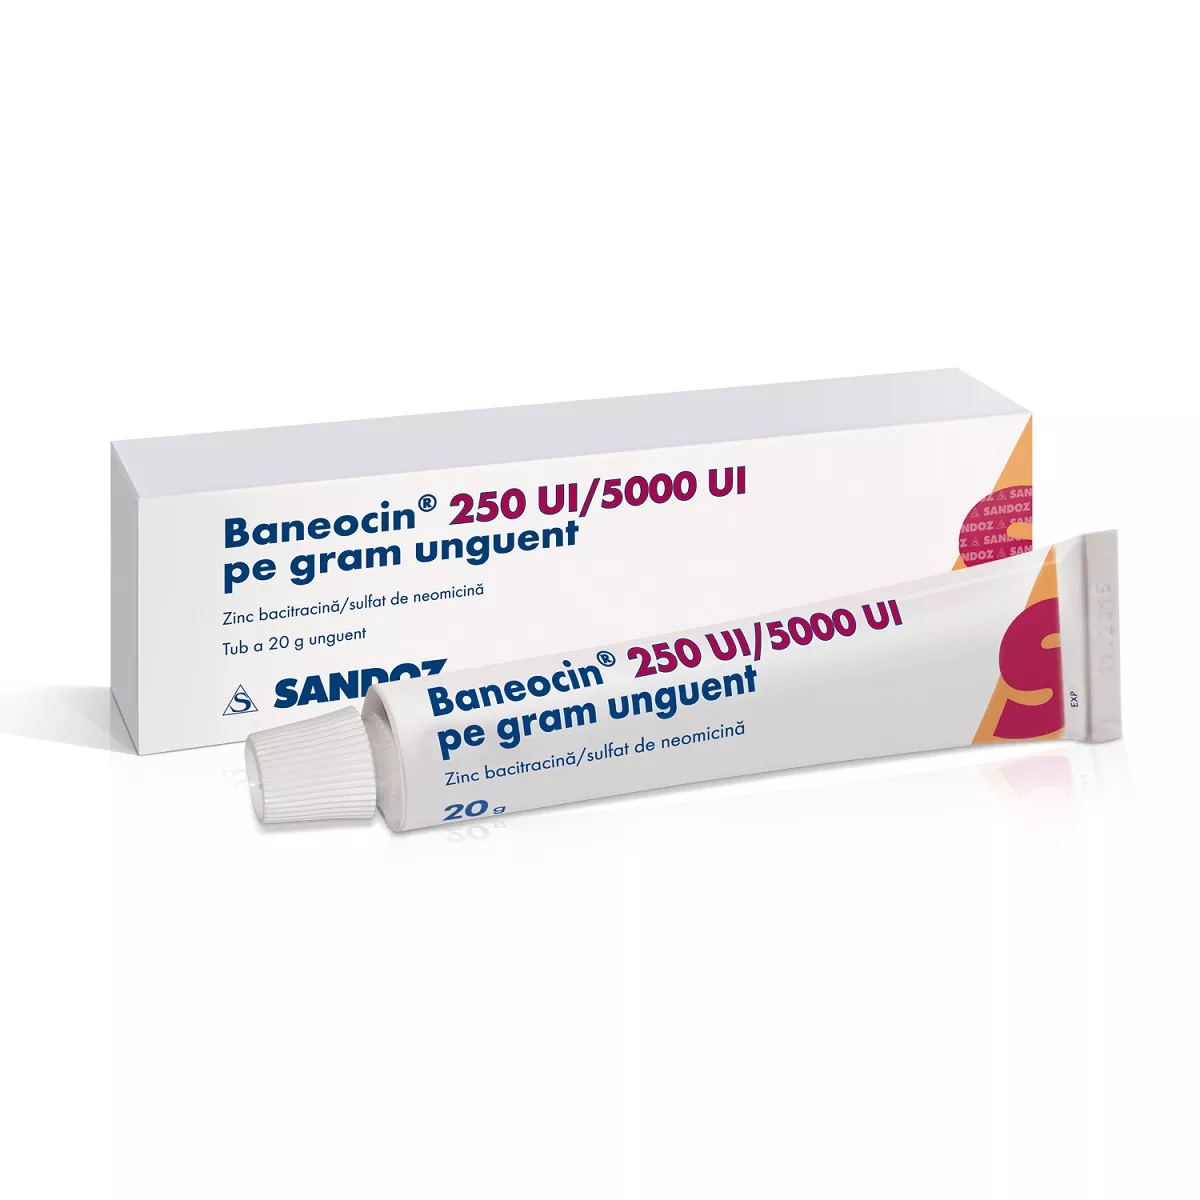 Baneocin unguent, 250 UI/5000 UI pe gram, 20 g, Sandoz, [],nordpharm.ro